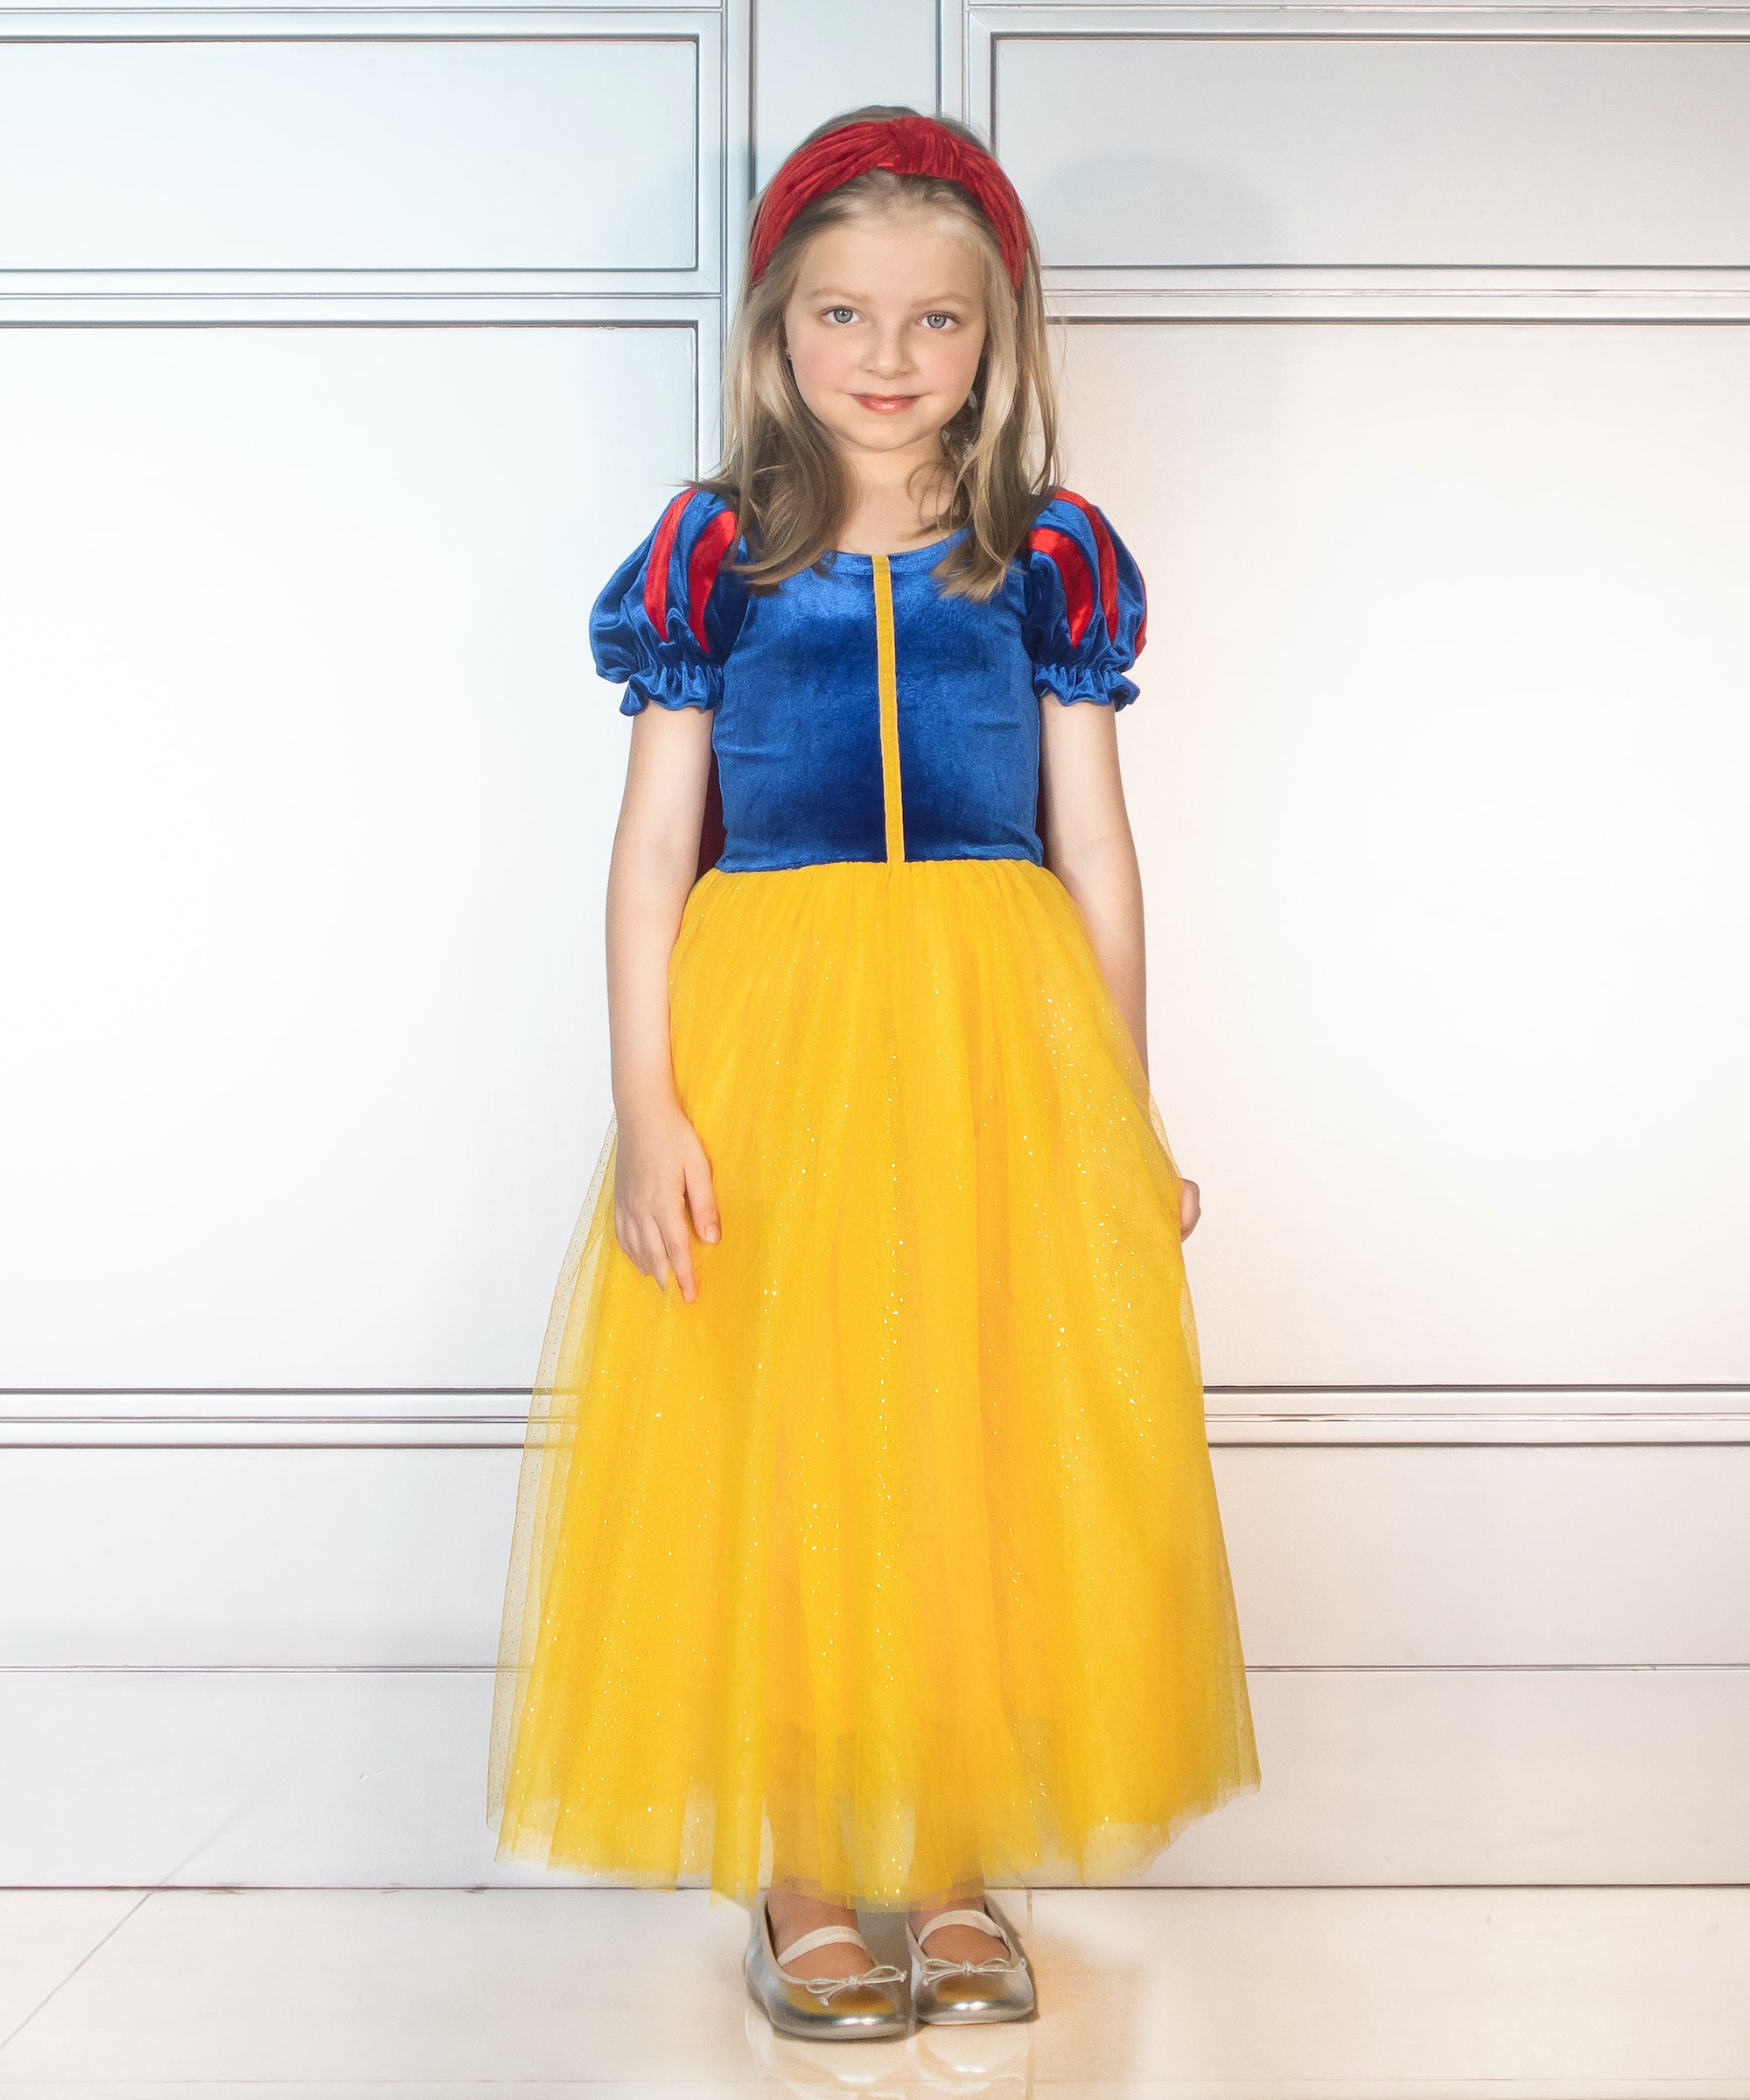 Snow White Photo Shoot Princess Dress Gown